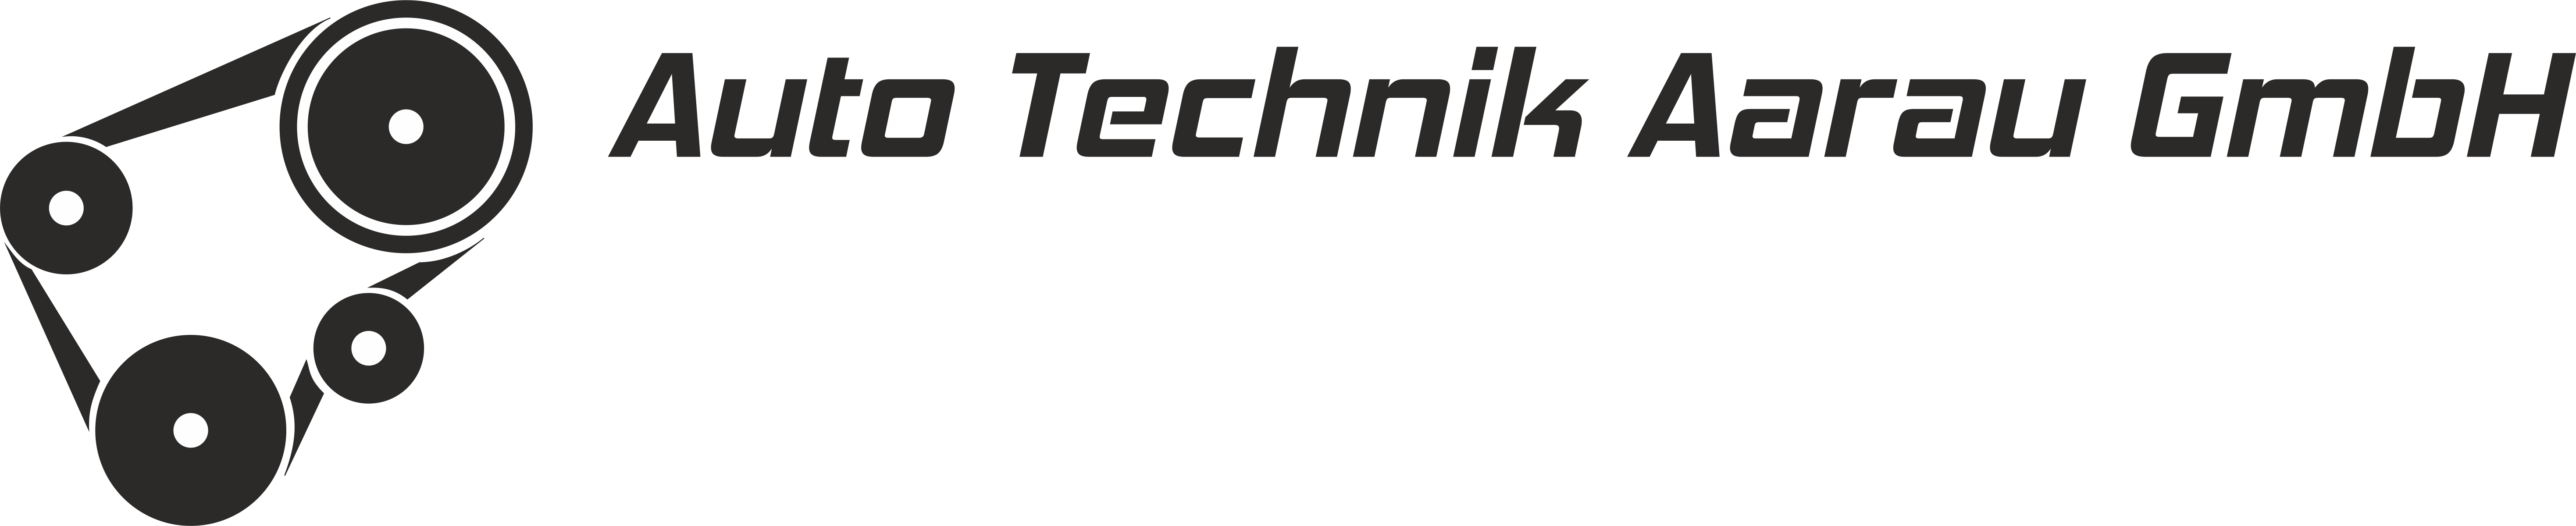 Auto Technik Aarau GmbH